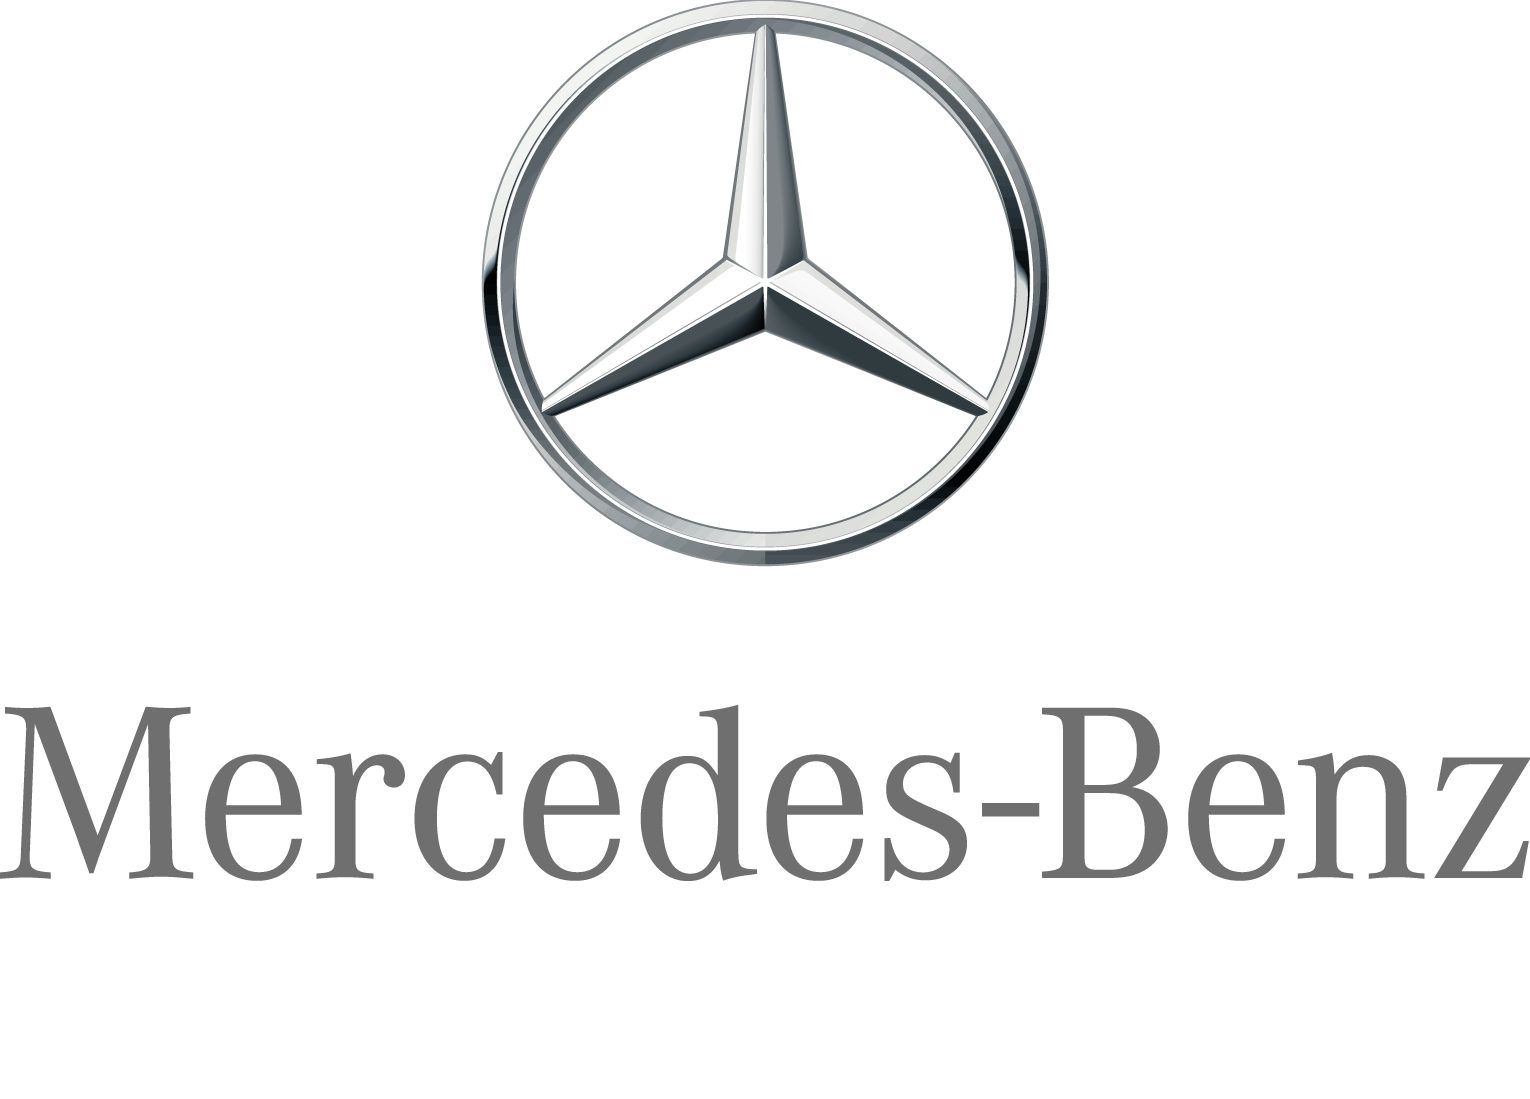 Mercedes logos PNG images free download.